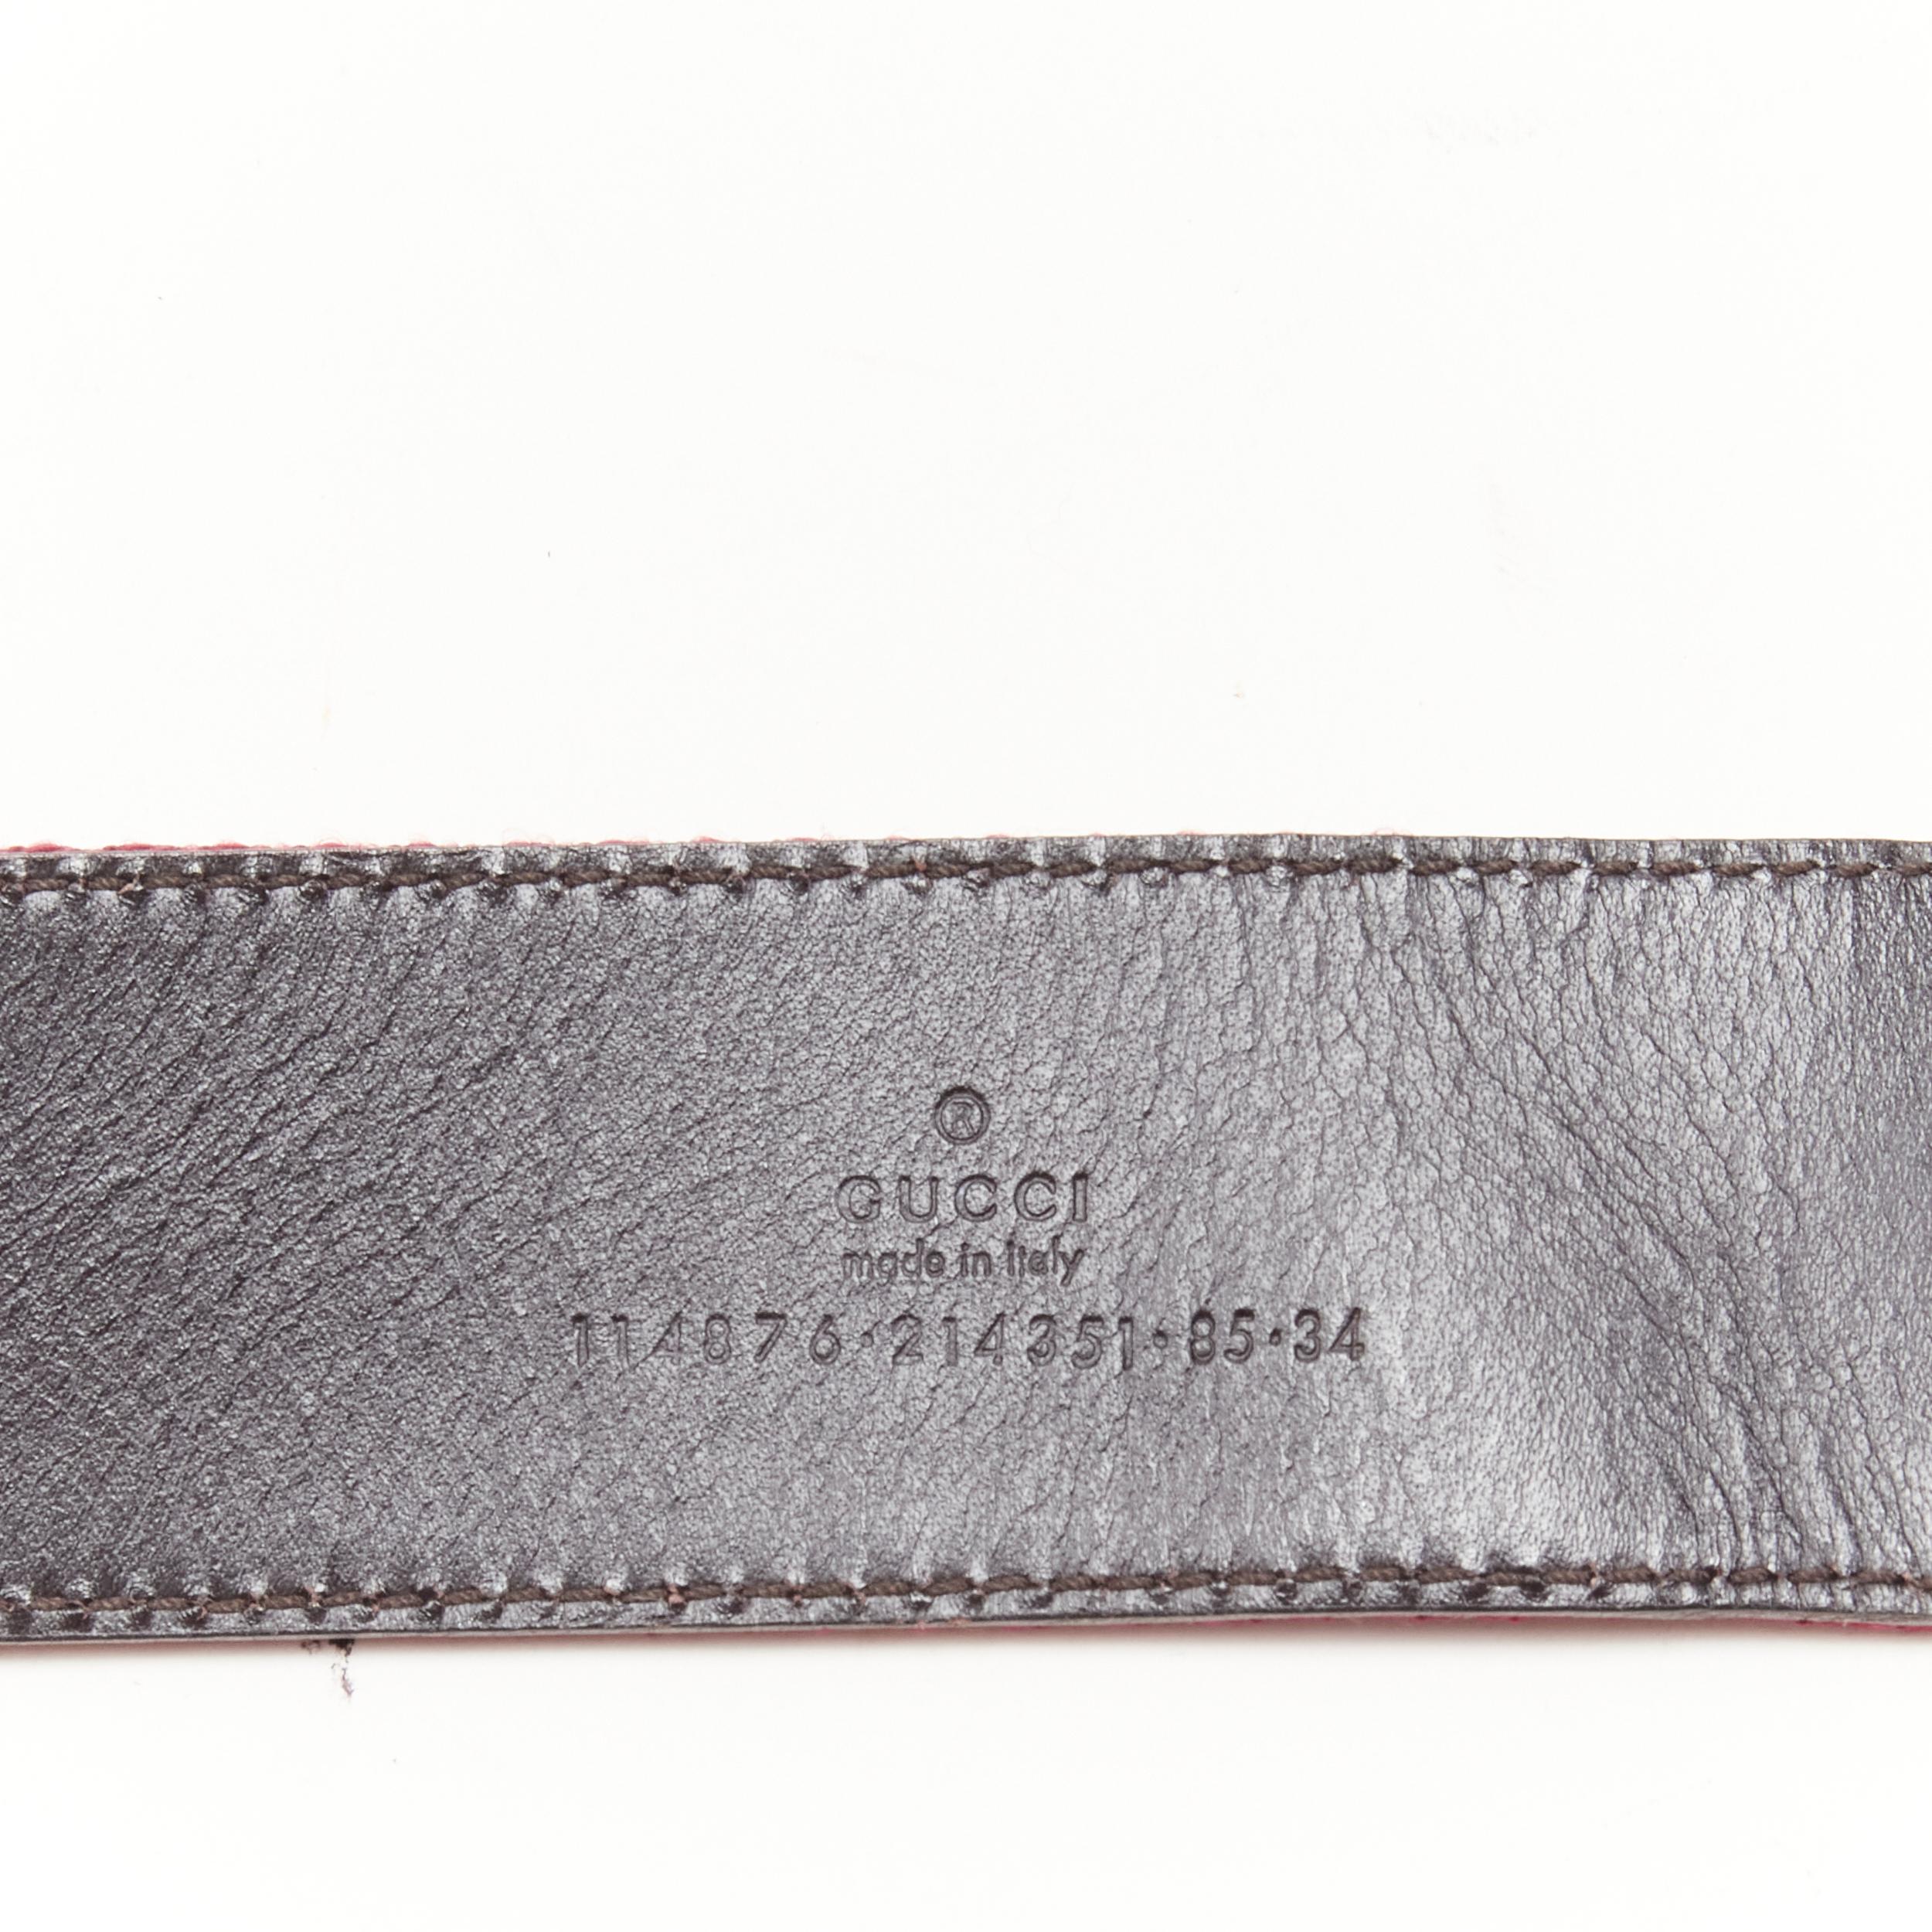 GUCCI gold GG metal buckle signature red green web nylon belt 85cm 34